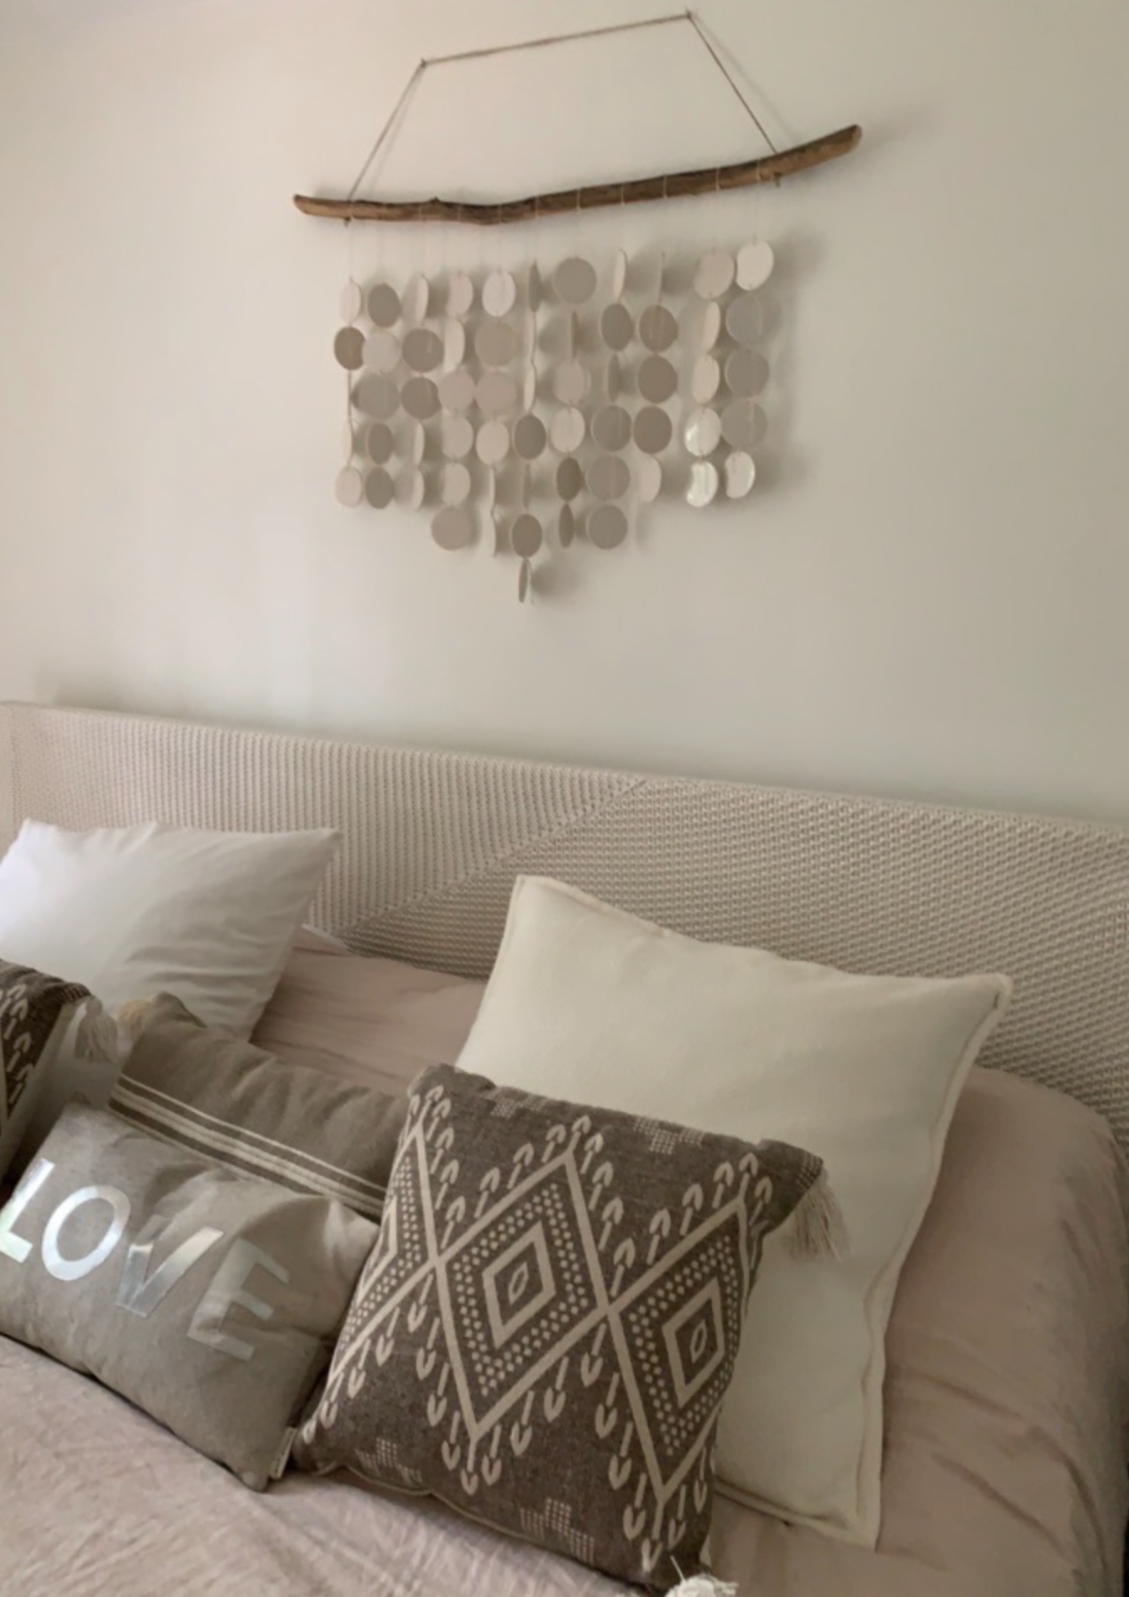 Stylish coastal home decor with hanging ceramic discs